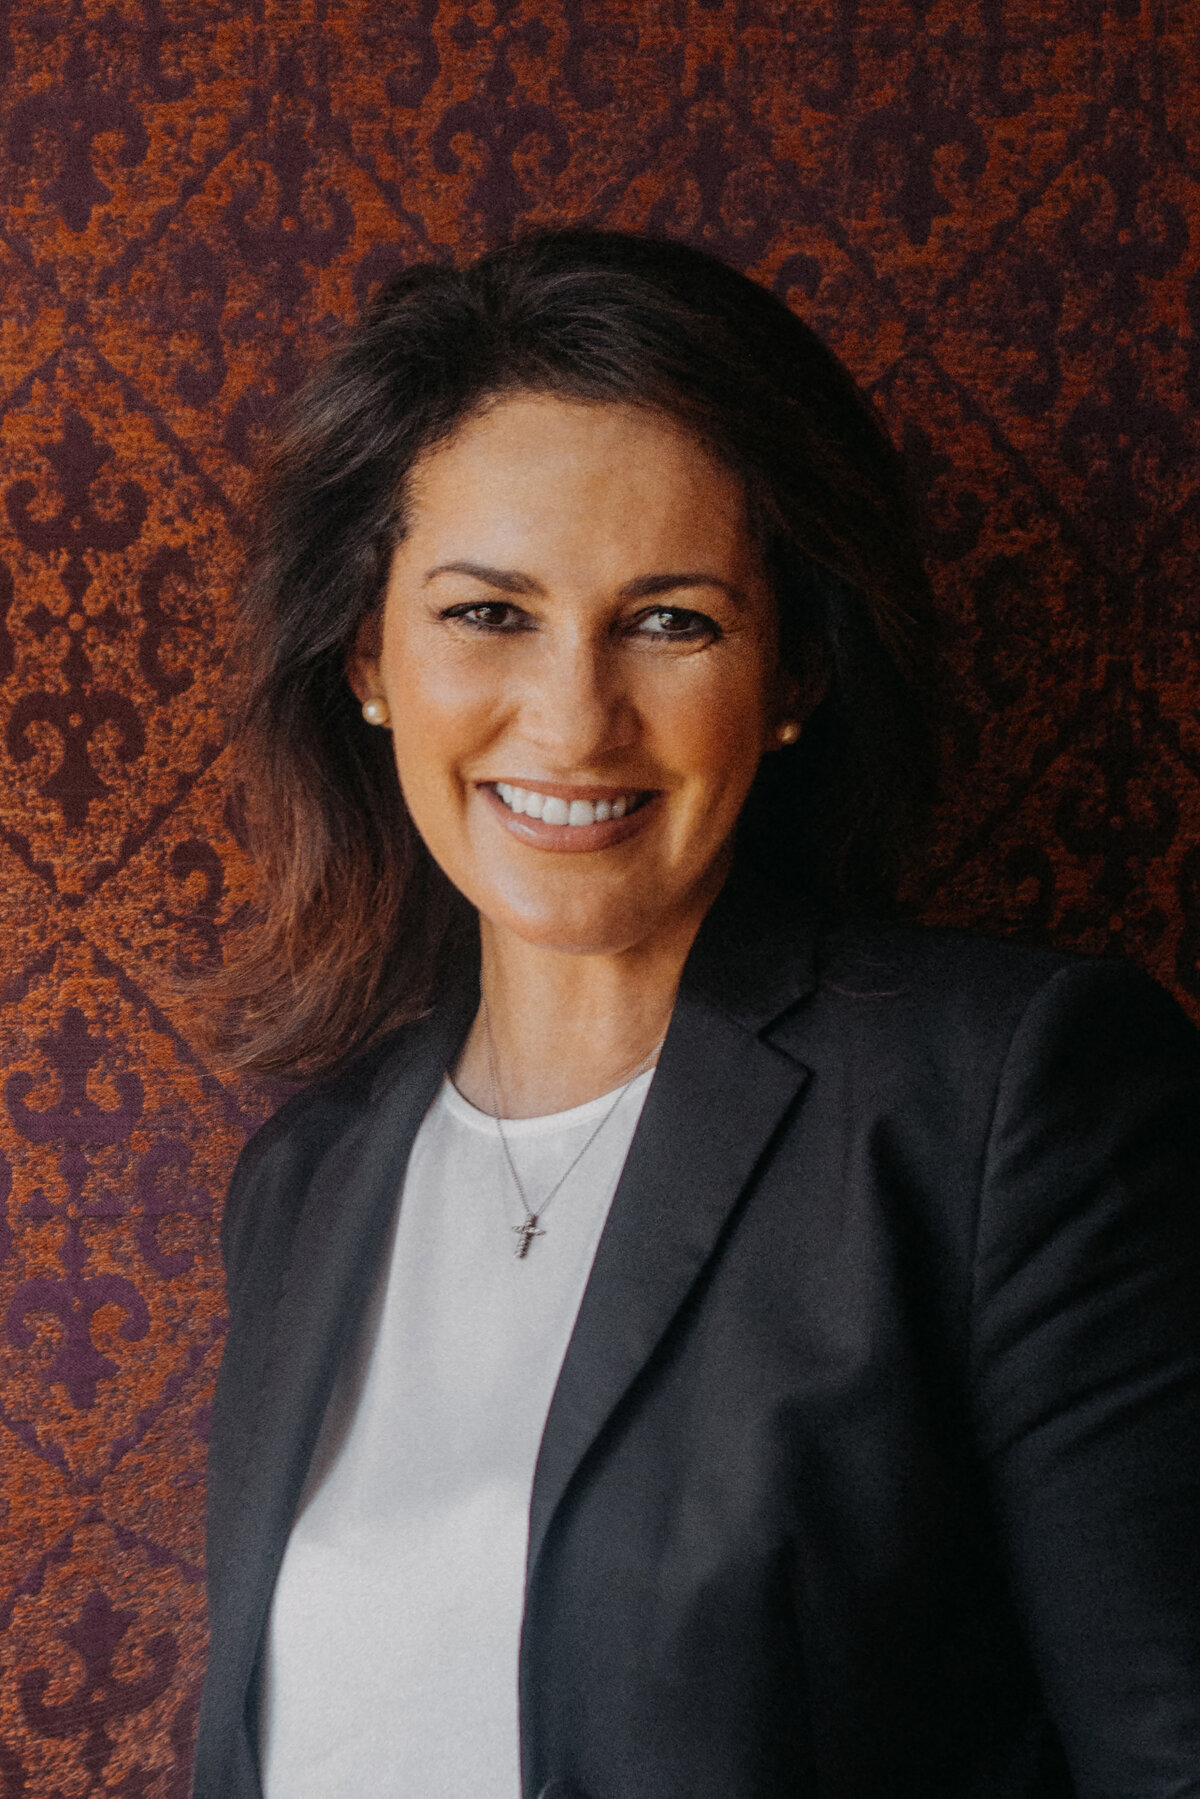 Porträt Ministerin Michaela Kaniber